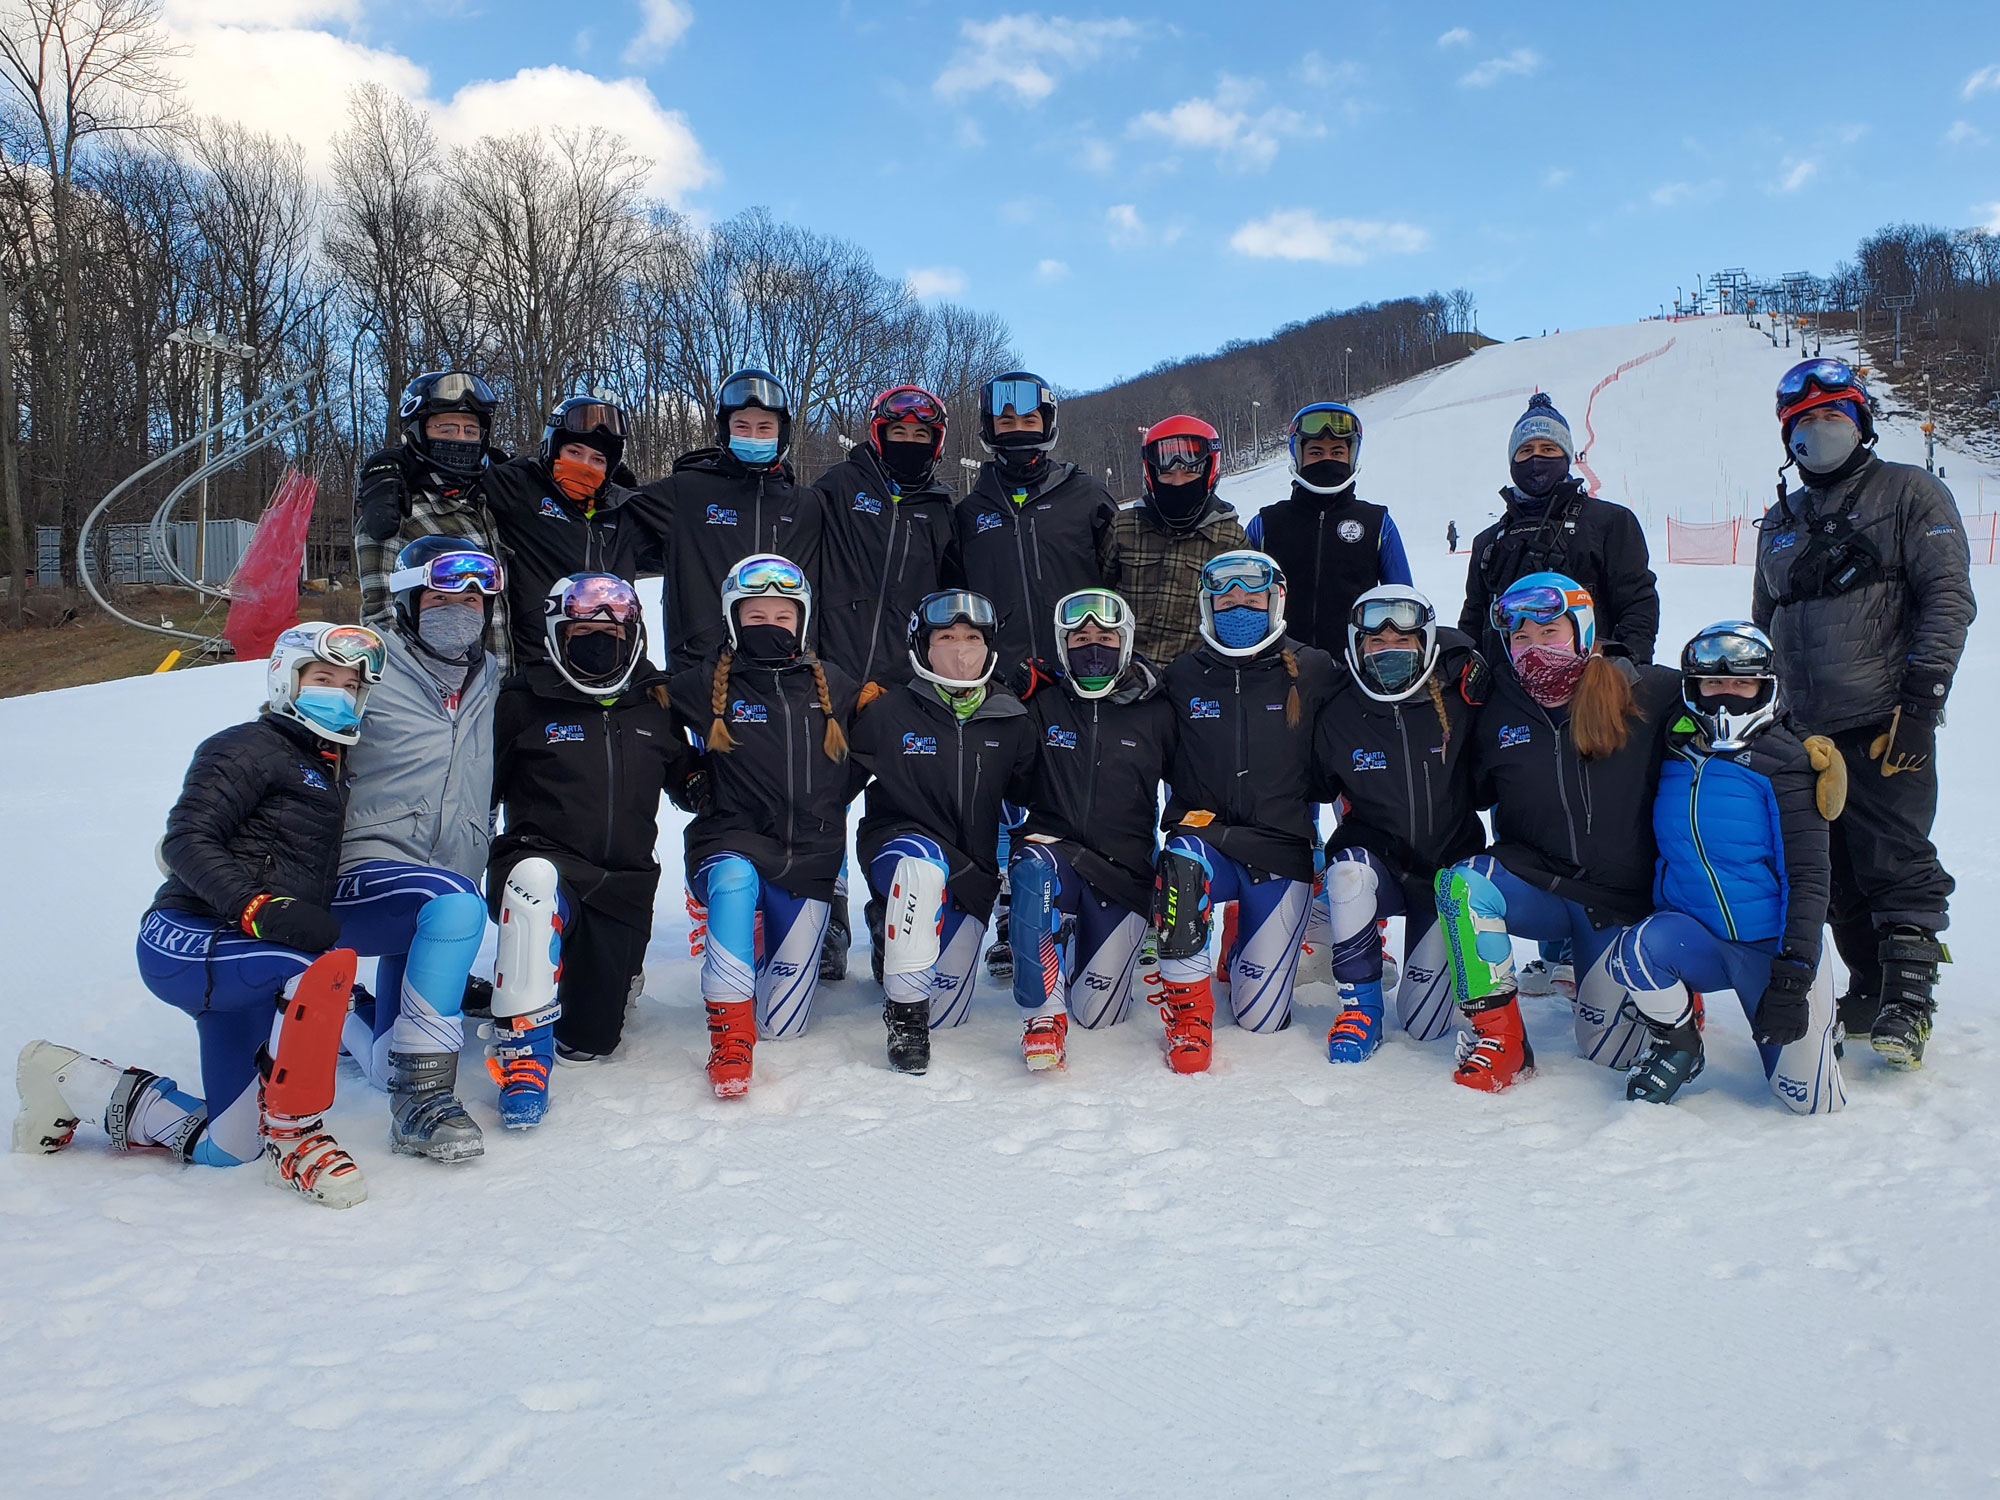 2021/22 Ski Team